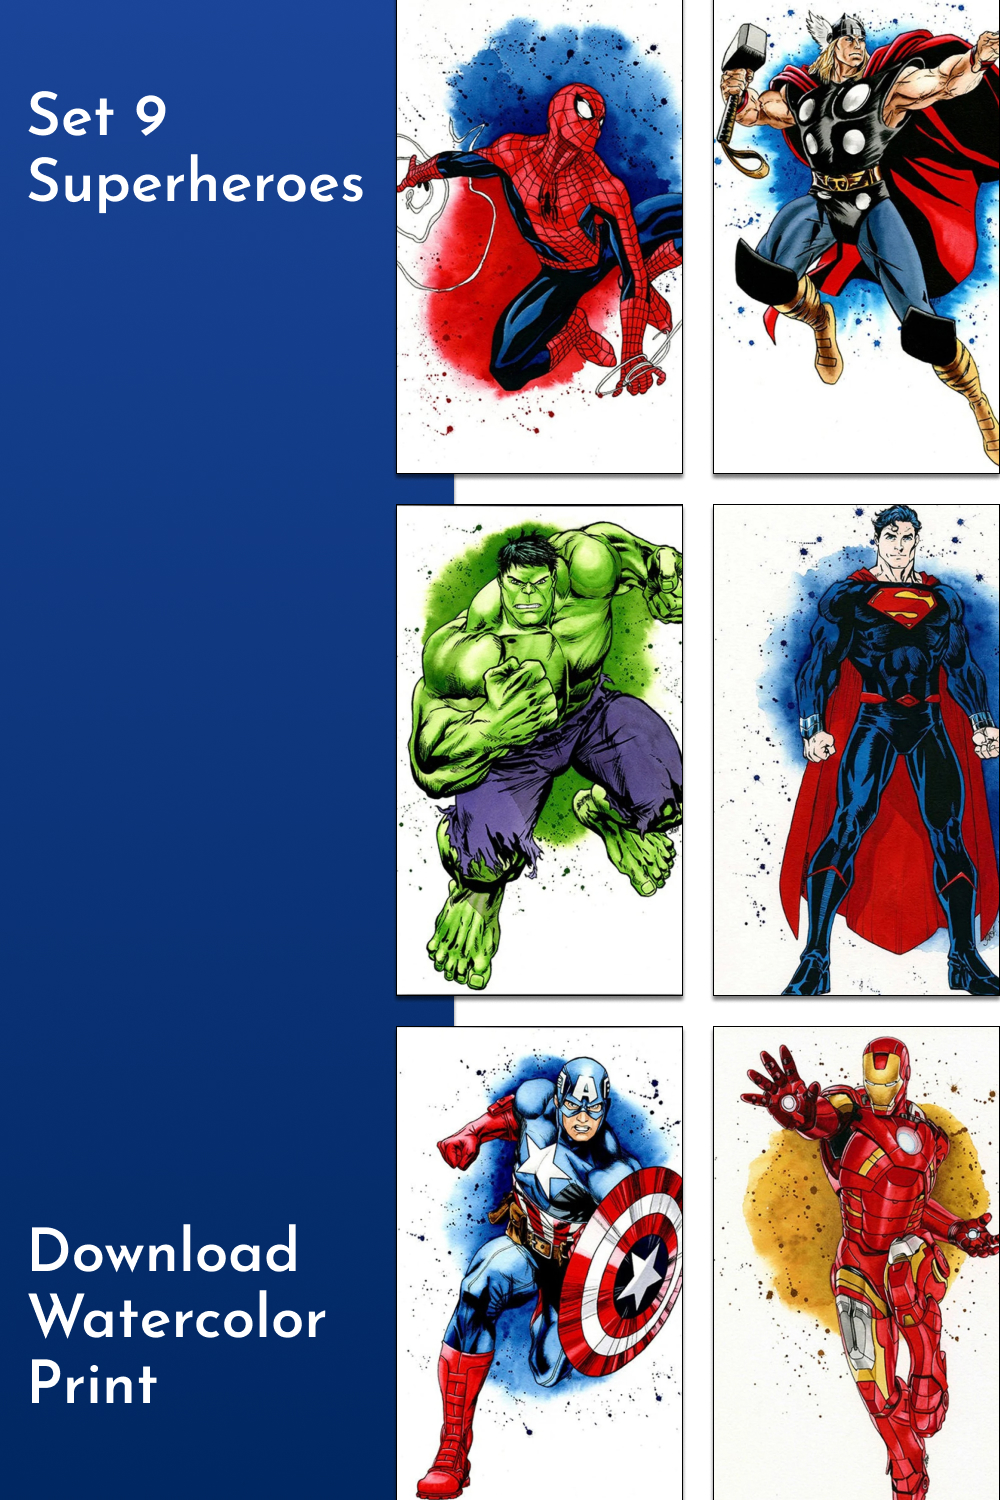 Superheroes download watercolor print of pinterest.